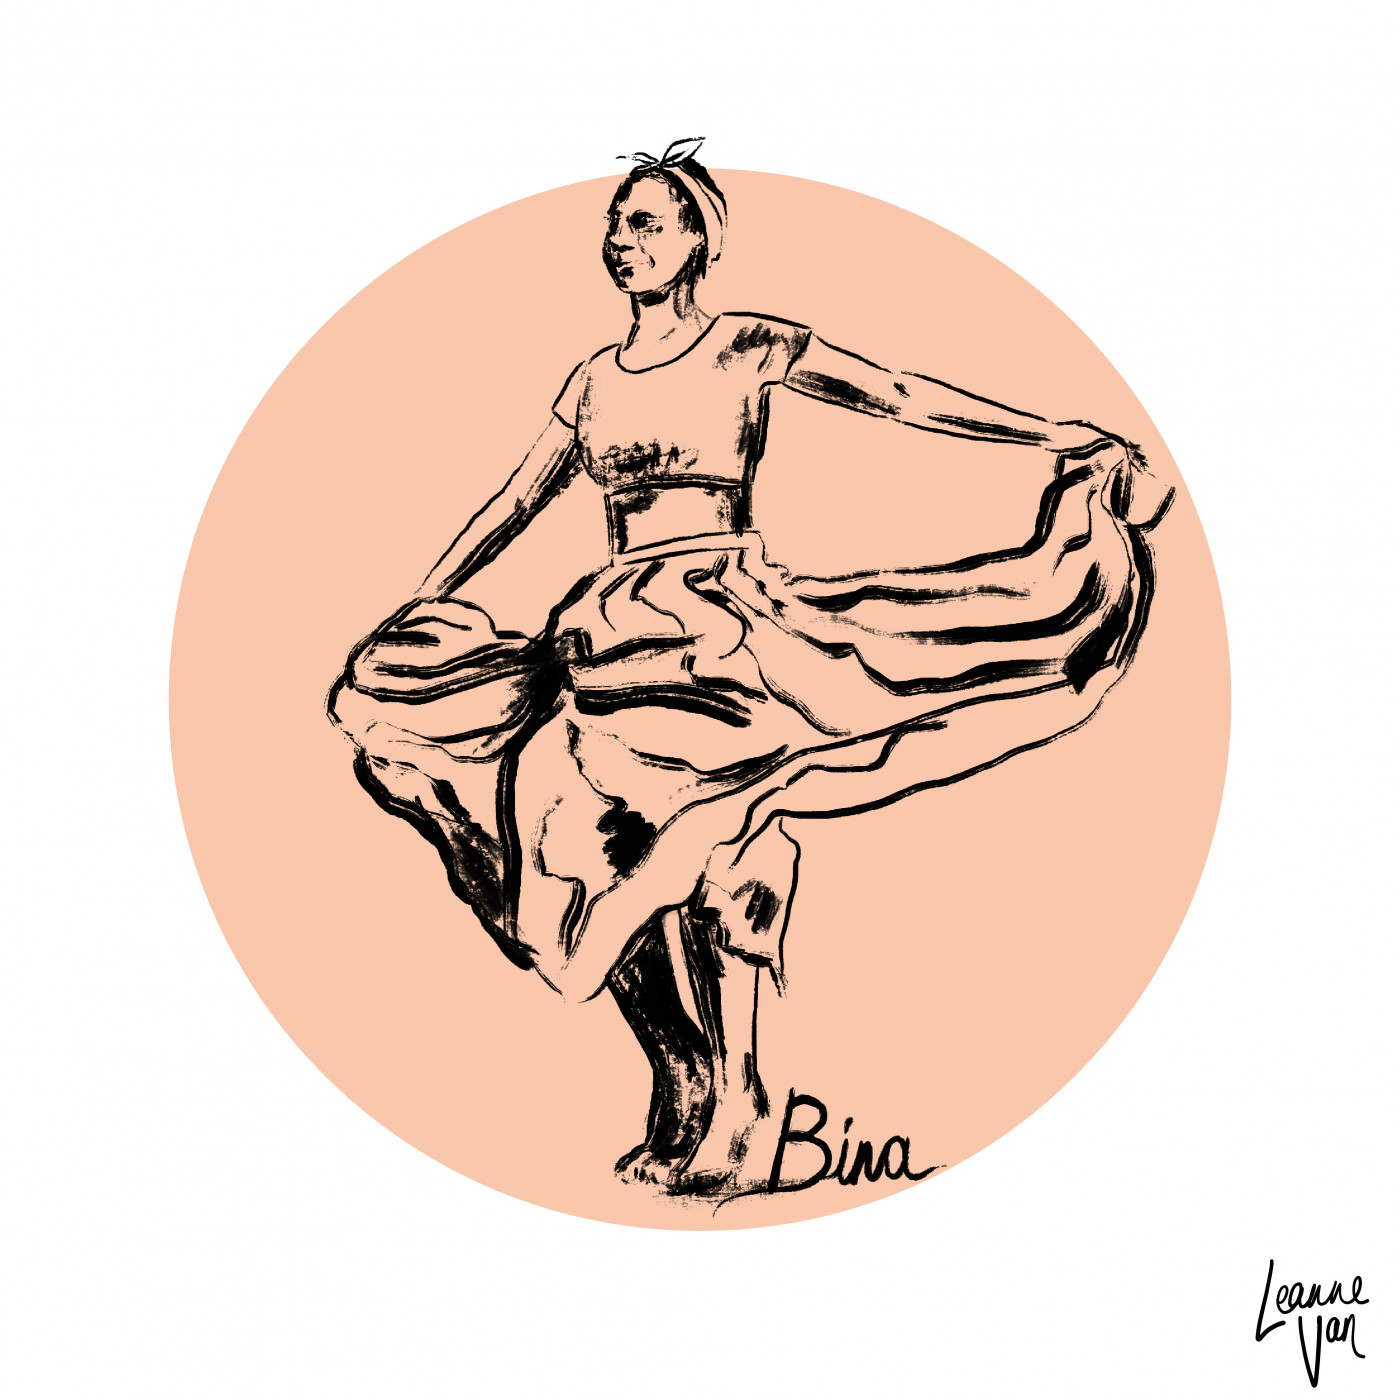 Bina, the dance in Africa podcast